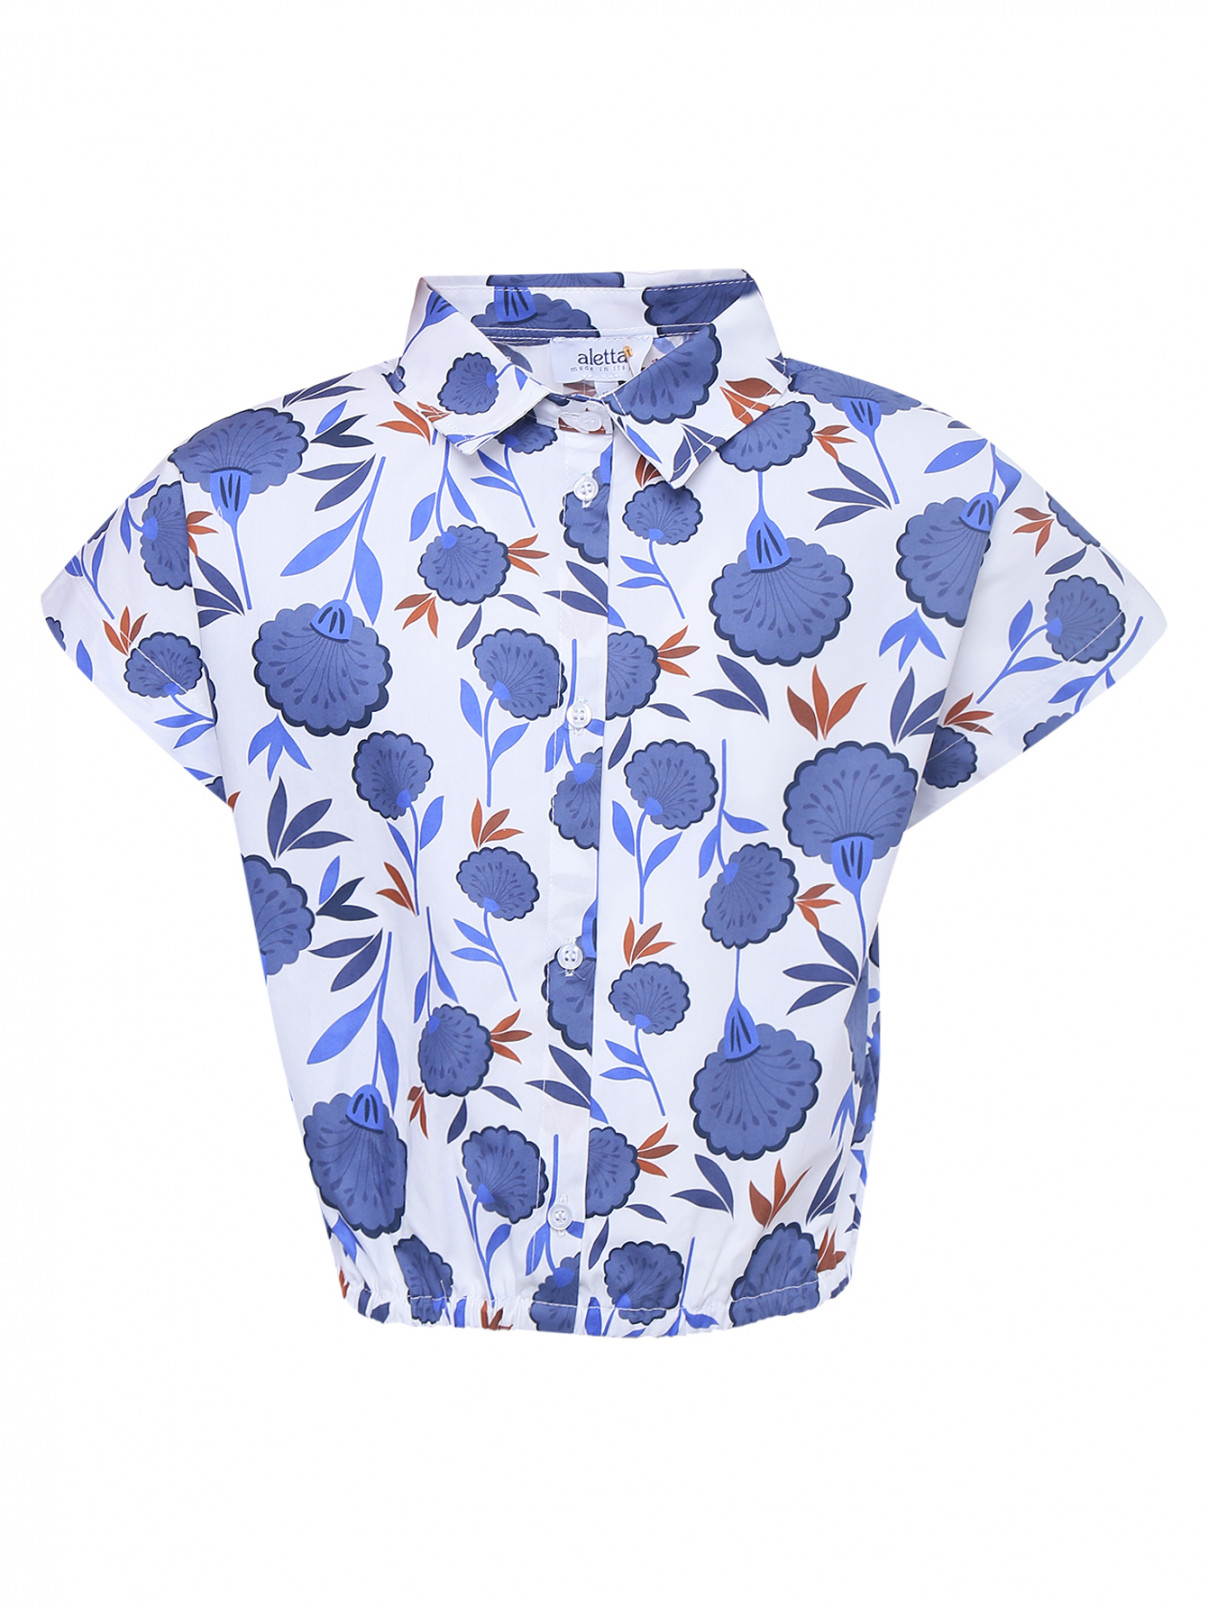 Блуза с коротким рукавом на резинке Aletta  –  Общий вид  – Цвет:  Узор